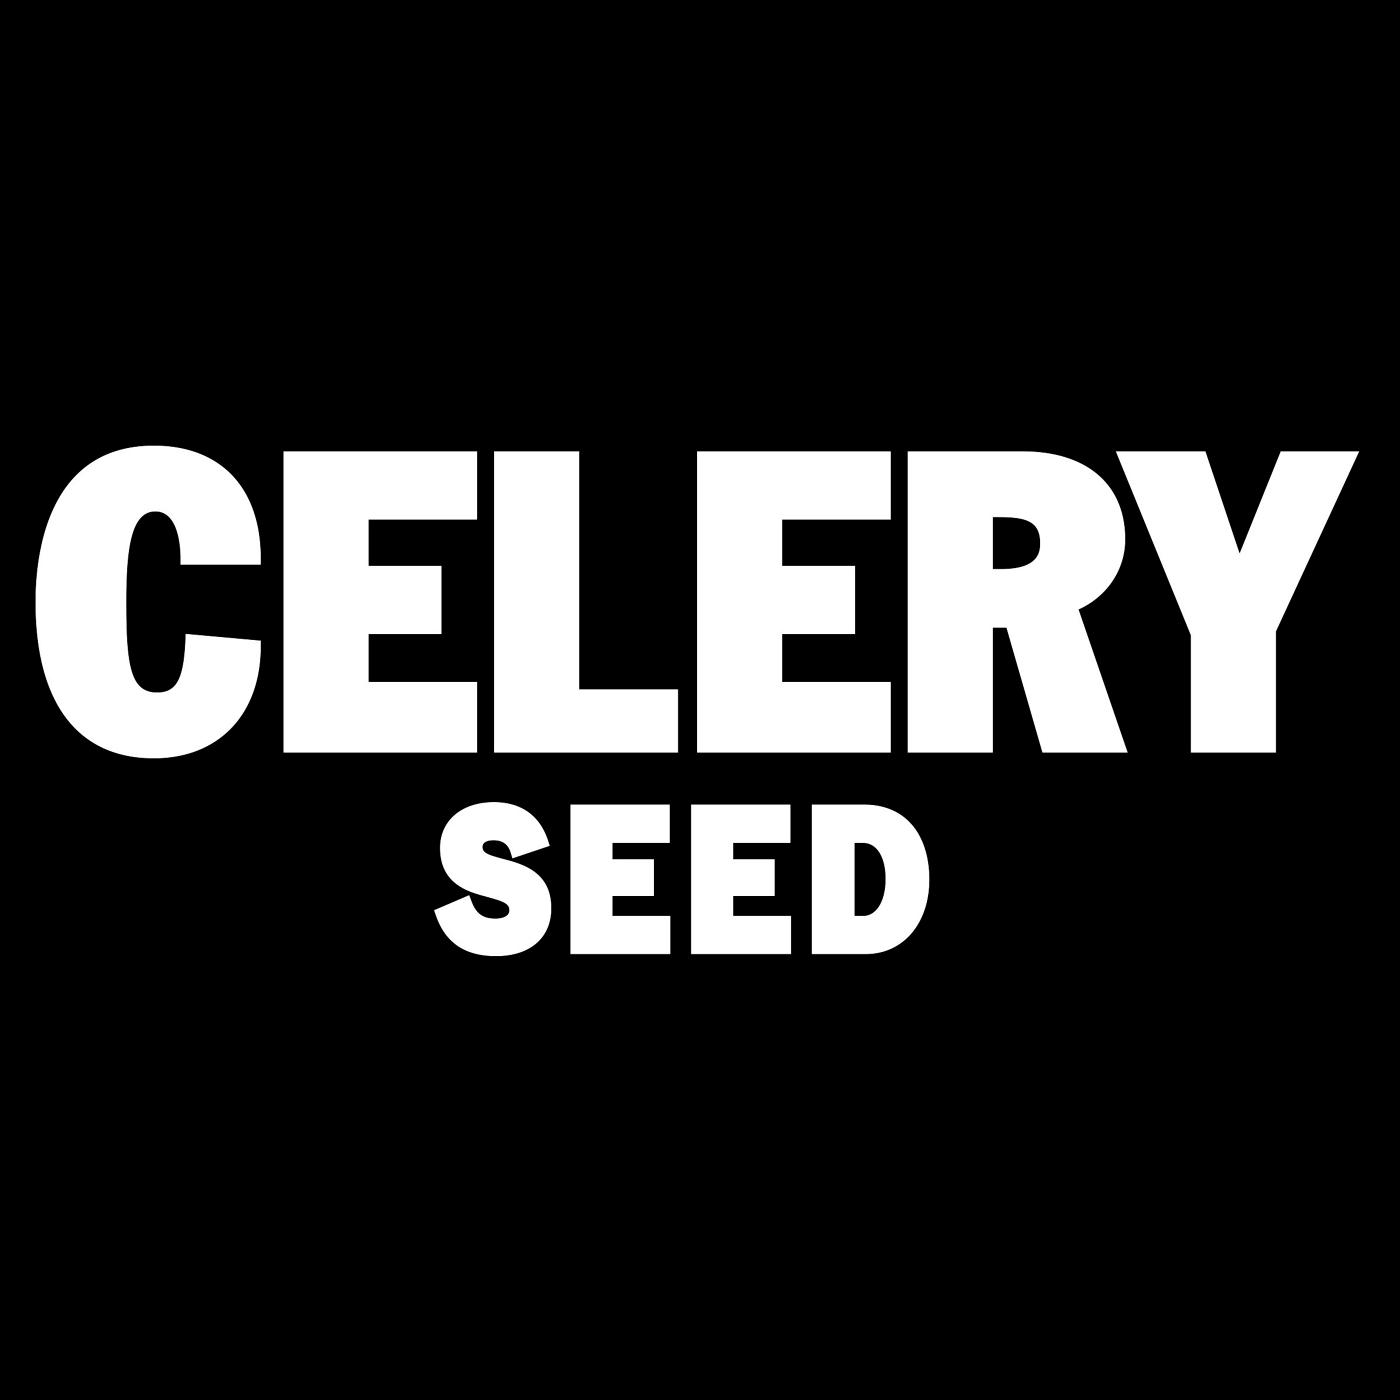 McCormick Whole Celery Seed; image 7 of 8